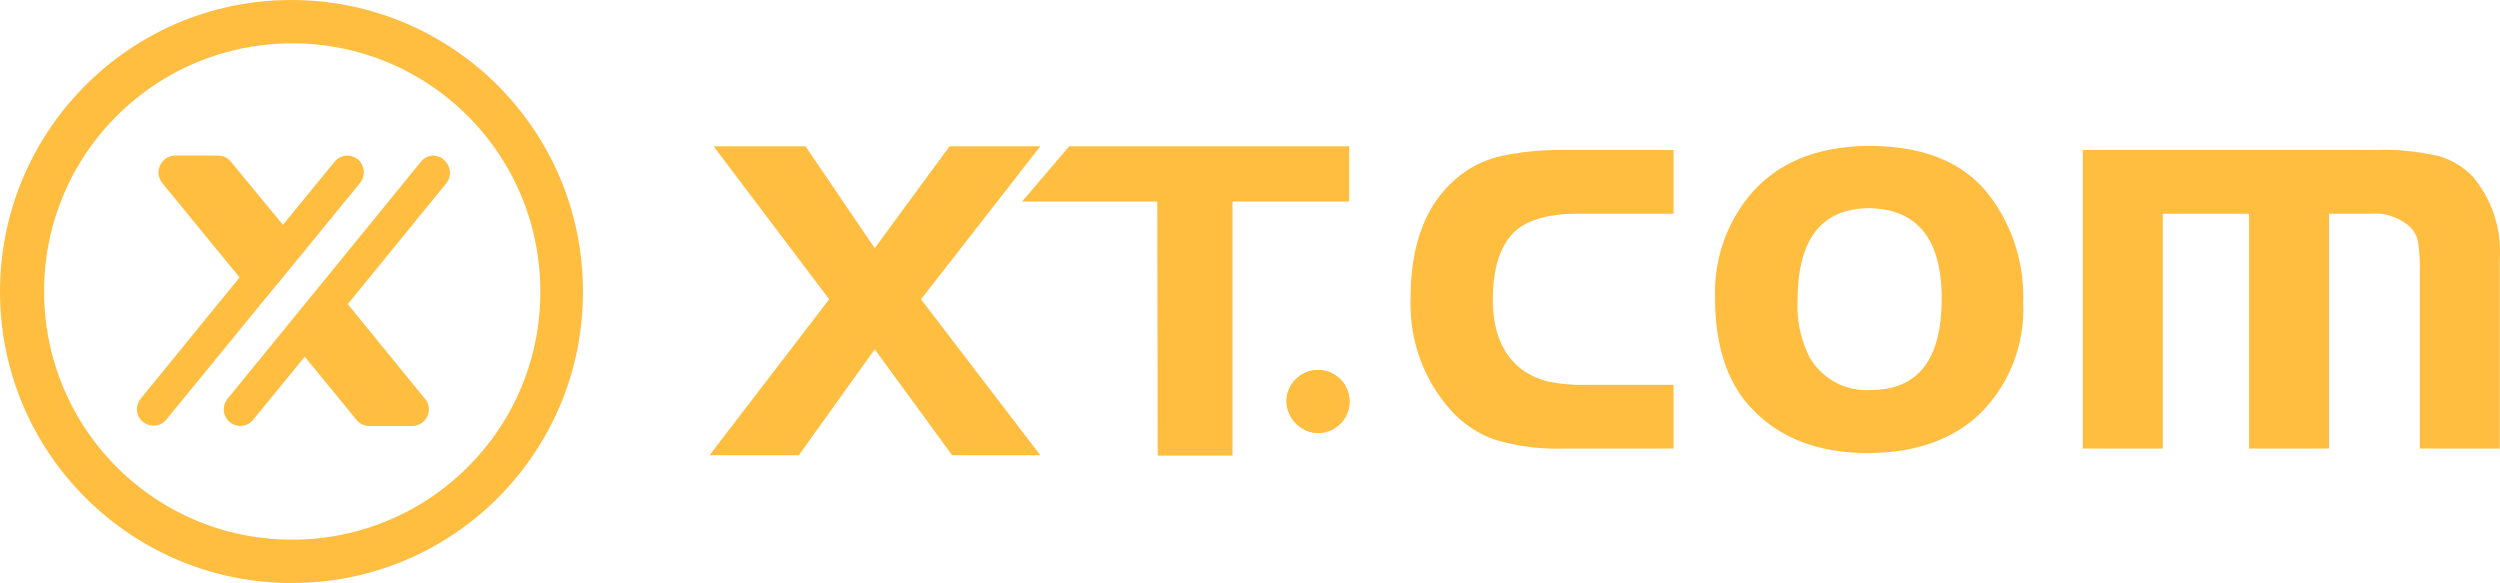 Ybmate com. XT.com. XT биржа. XT логотип. XT биржа лого.